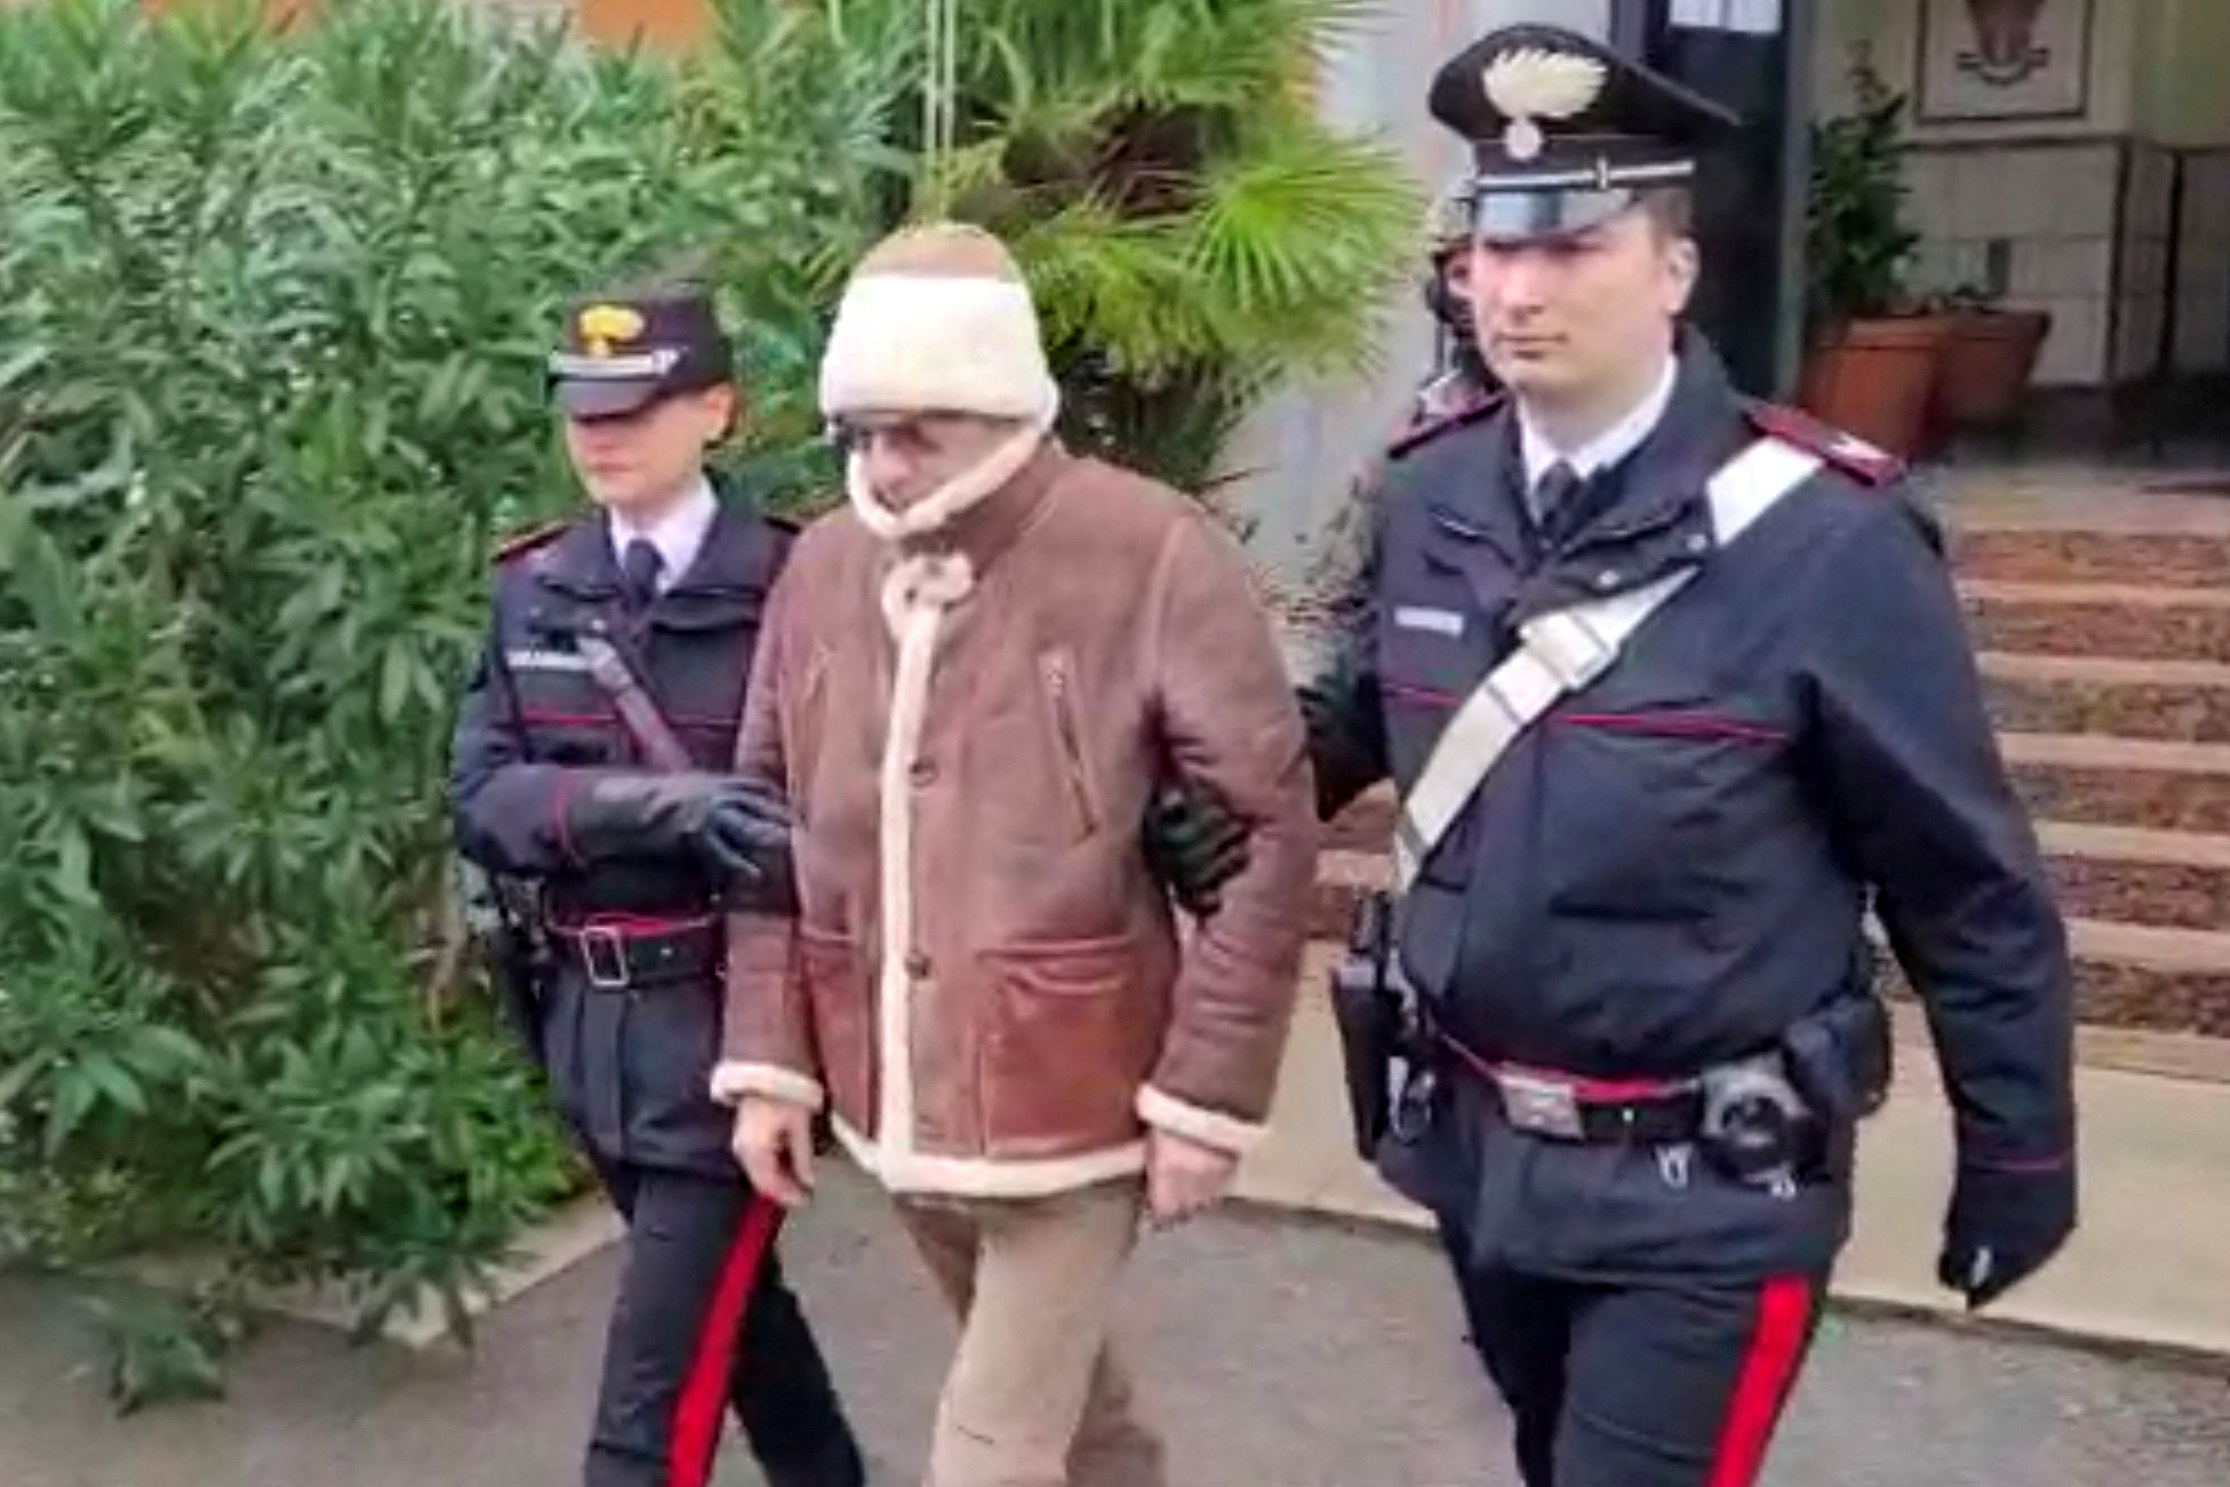 The arrest of the mafia leader Matteo Messina Denaro